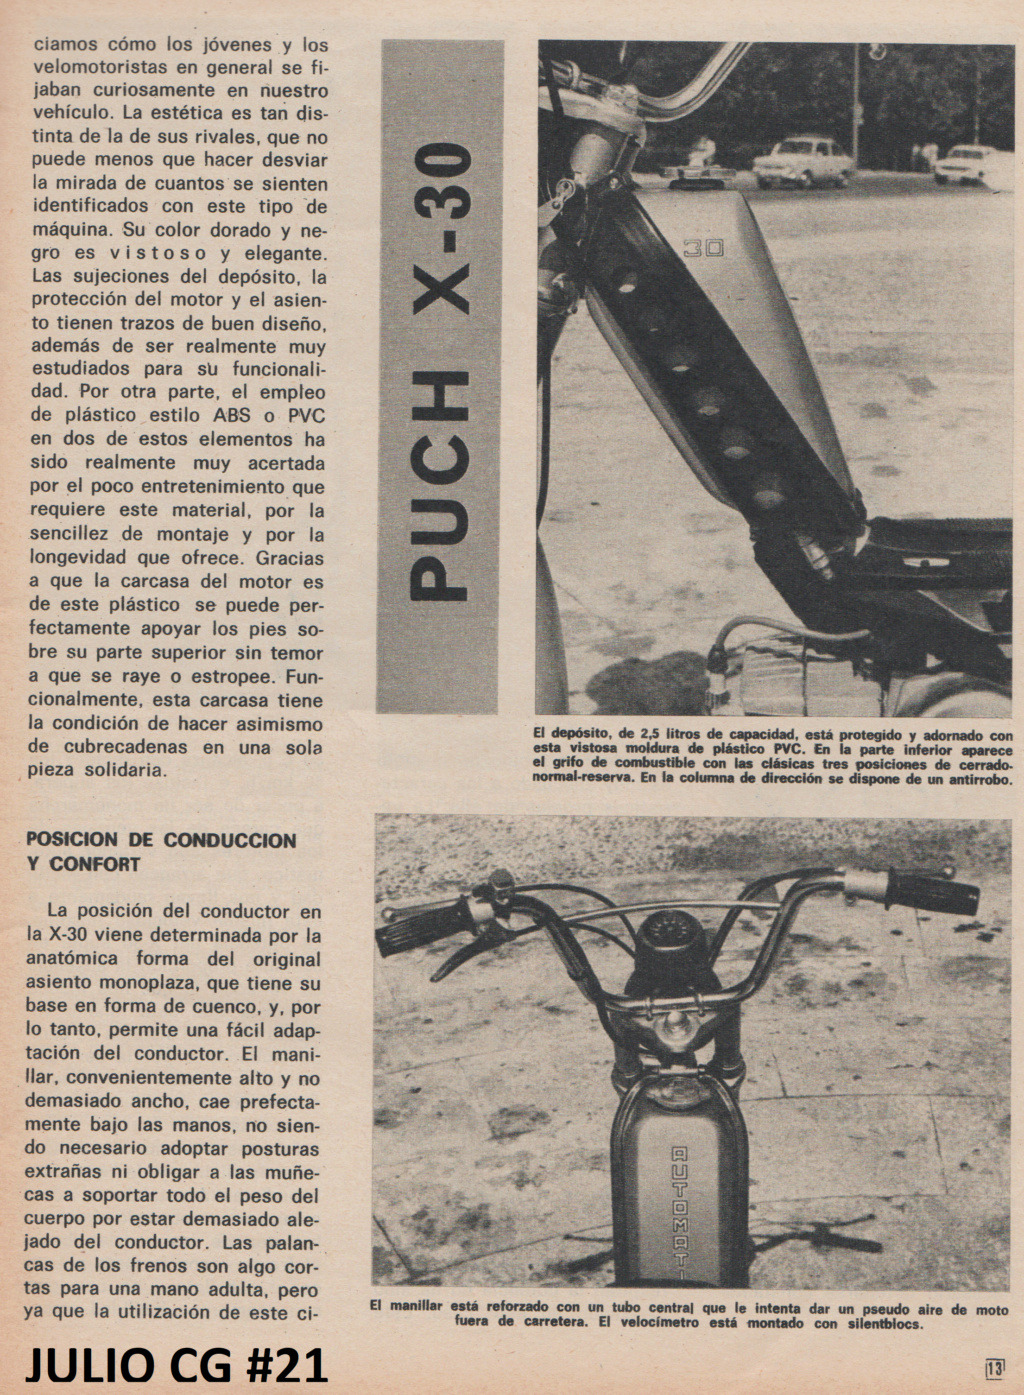 PUCH X30  Motociclismo  segunda quincena julio 1975 Escze335